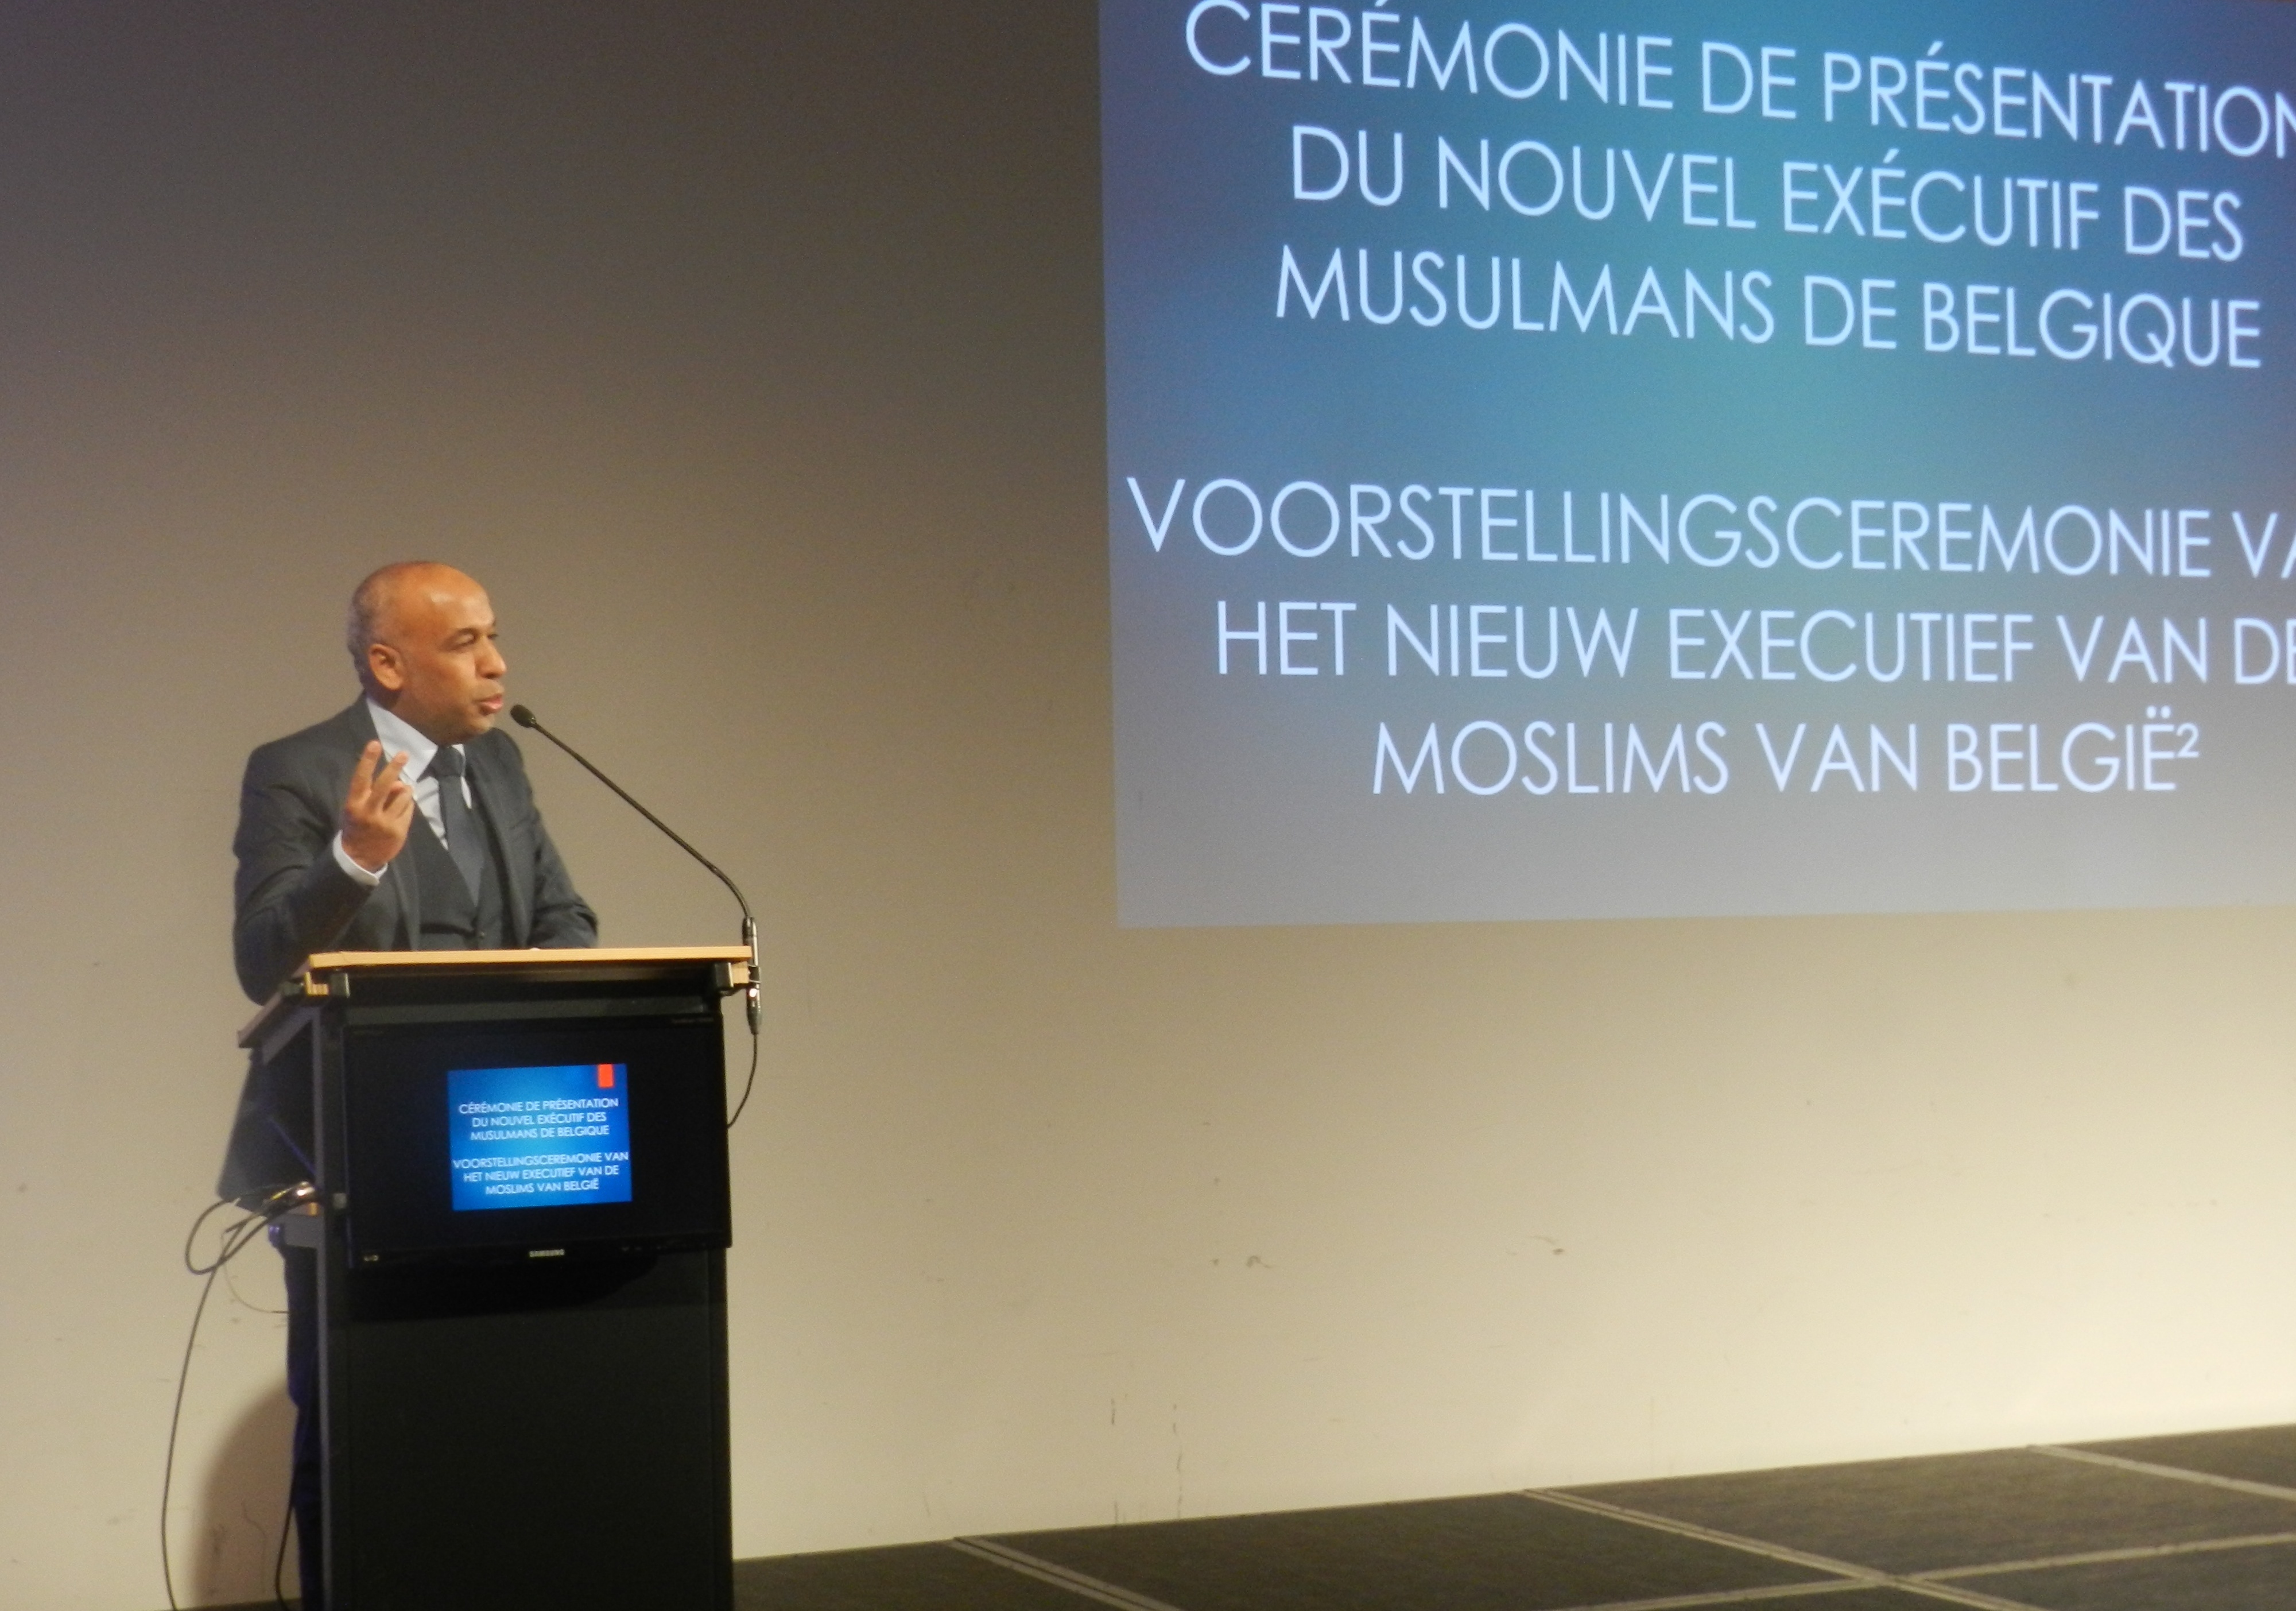 Nooruddin Ismaili, President of Executive body of Muslims in Belgium, speaking at the event